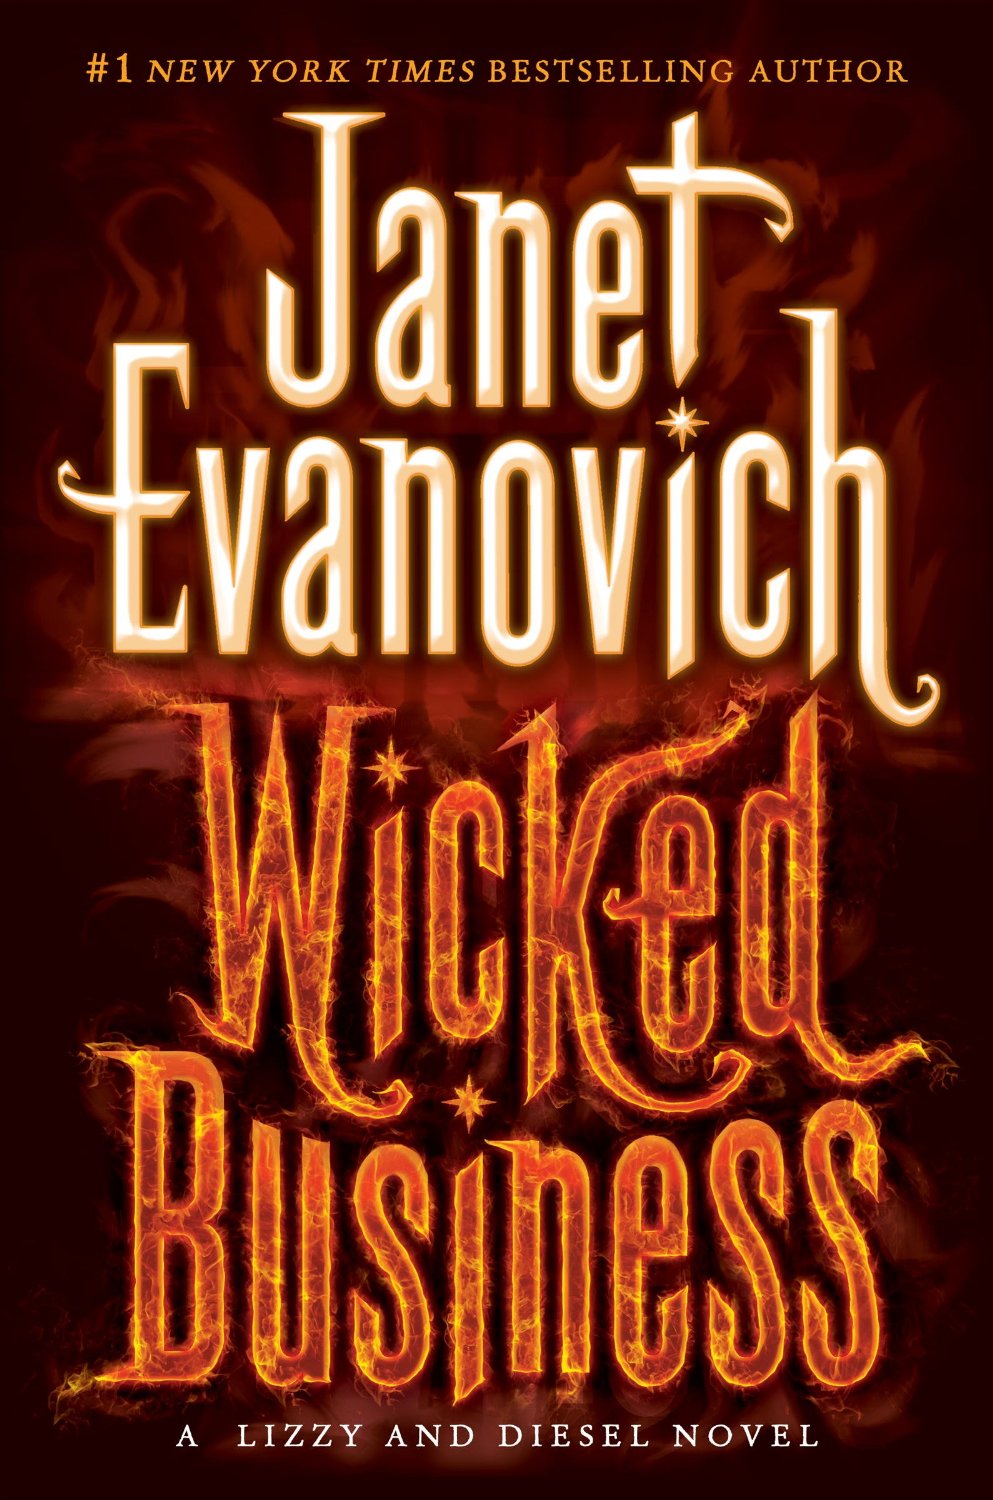 Evanovich Wicked Business